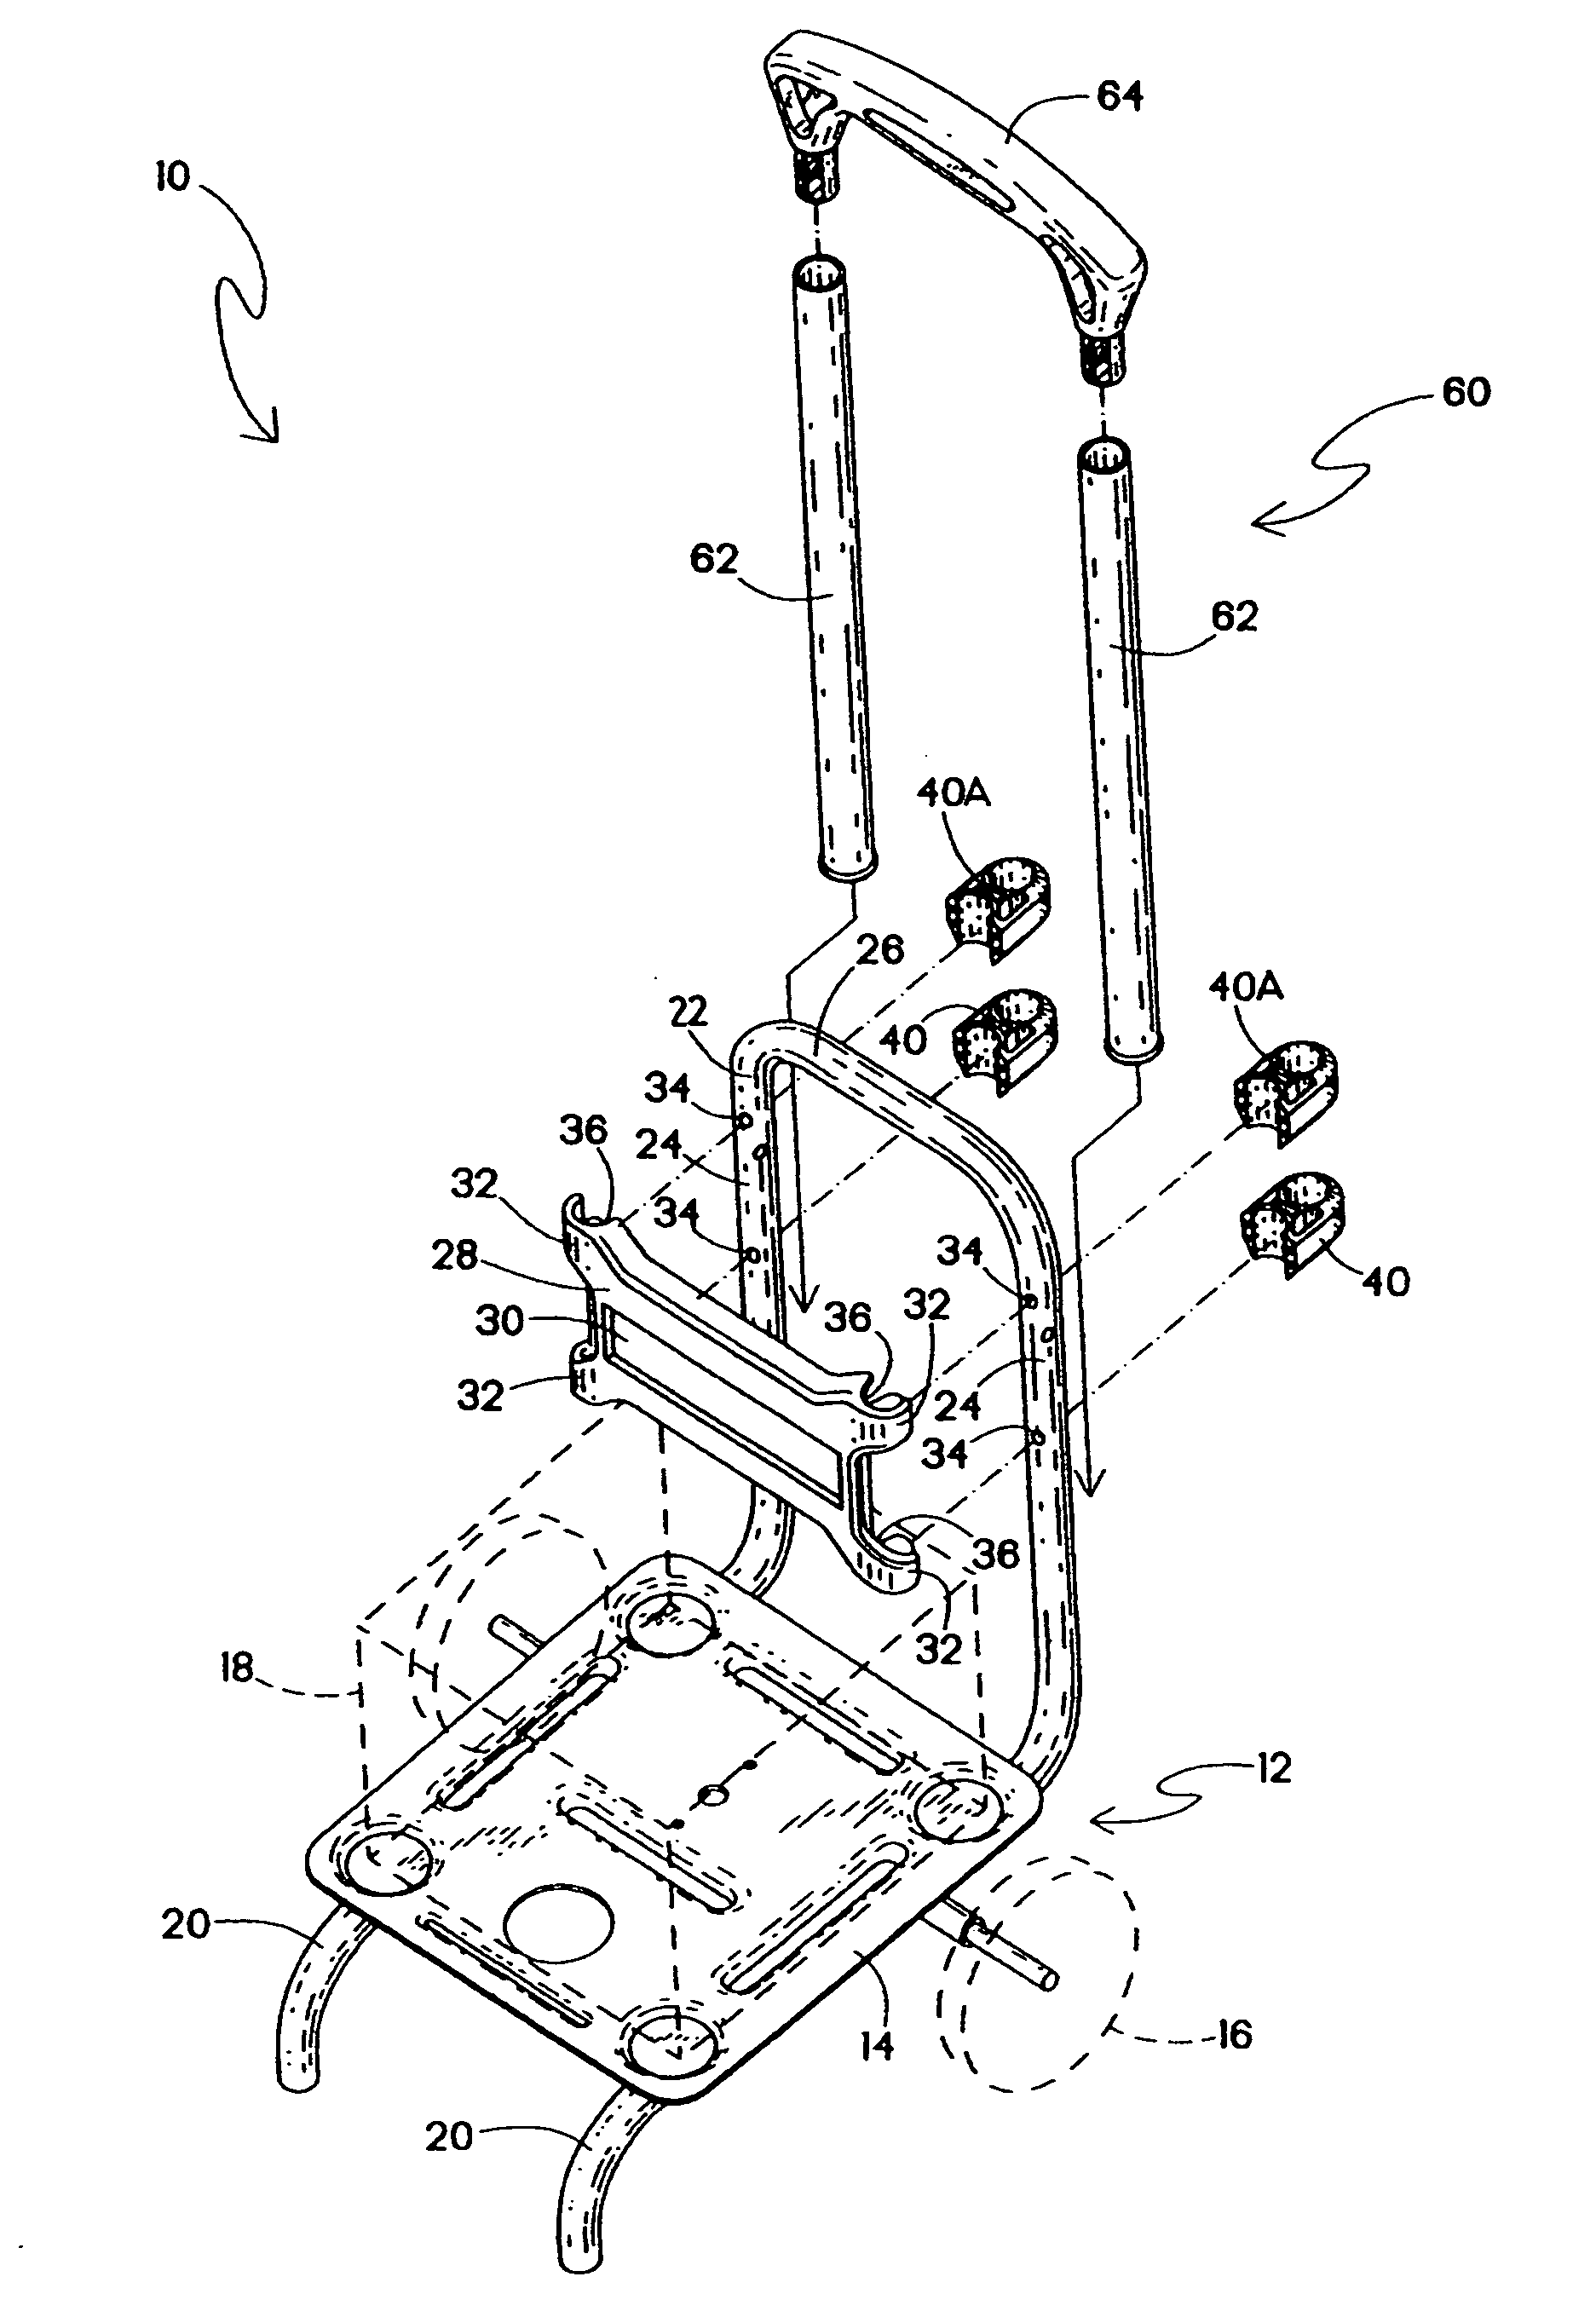 Portable air compressor dolly with retractable handle